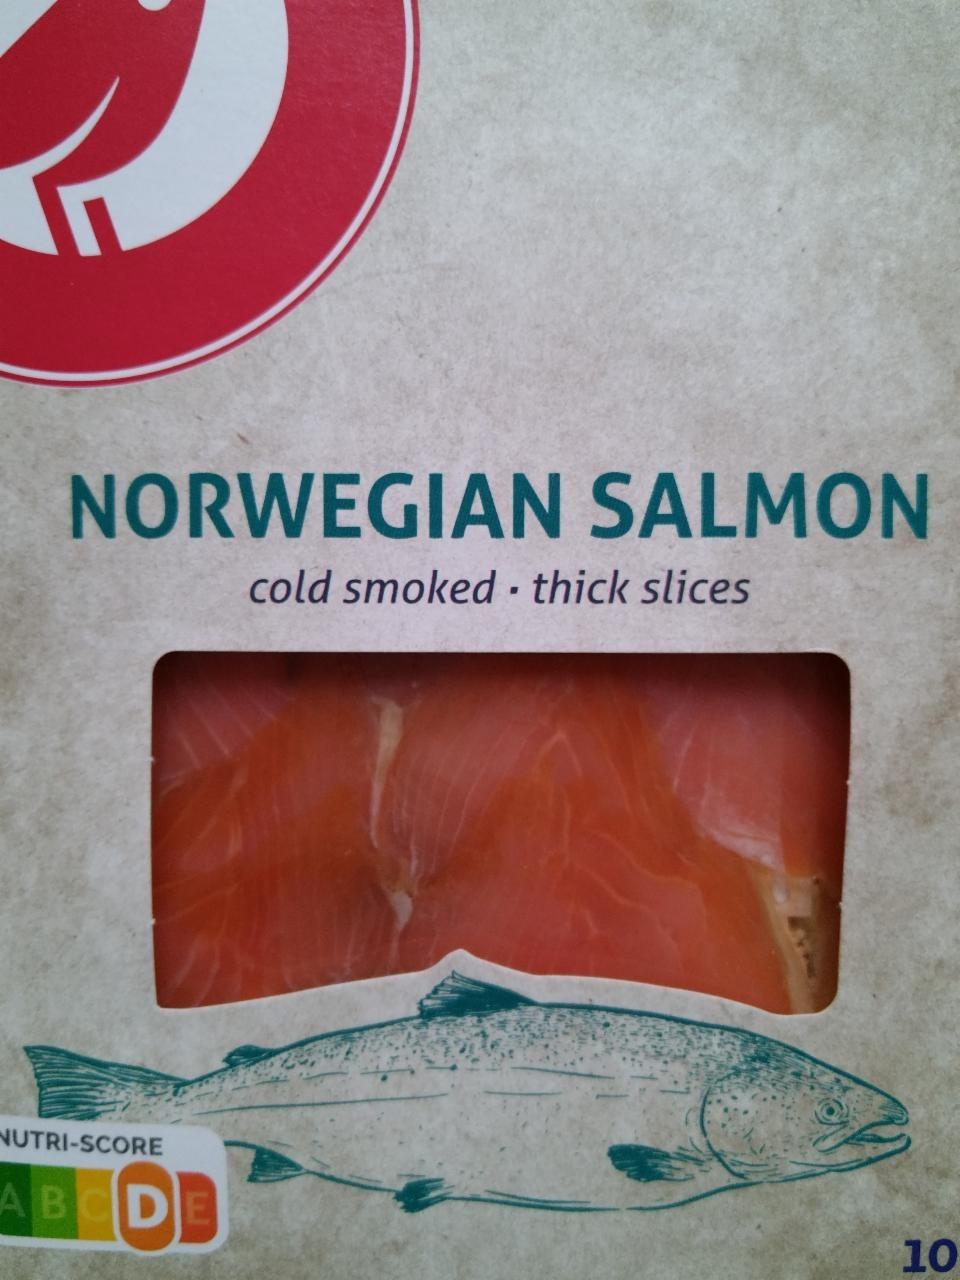 Képek - Norwegian salmon lazac cold smoked Auchan